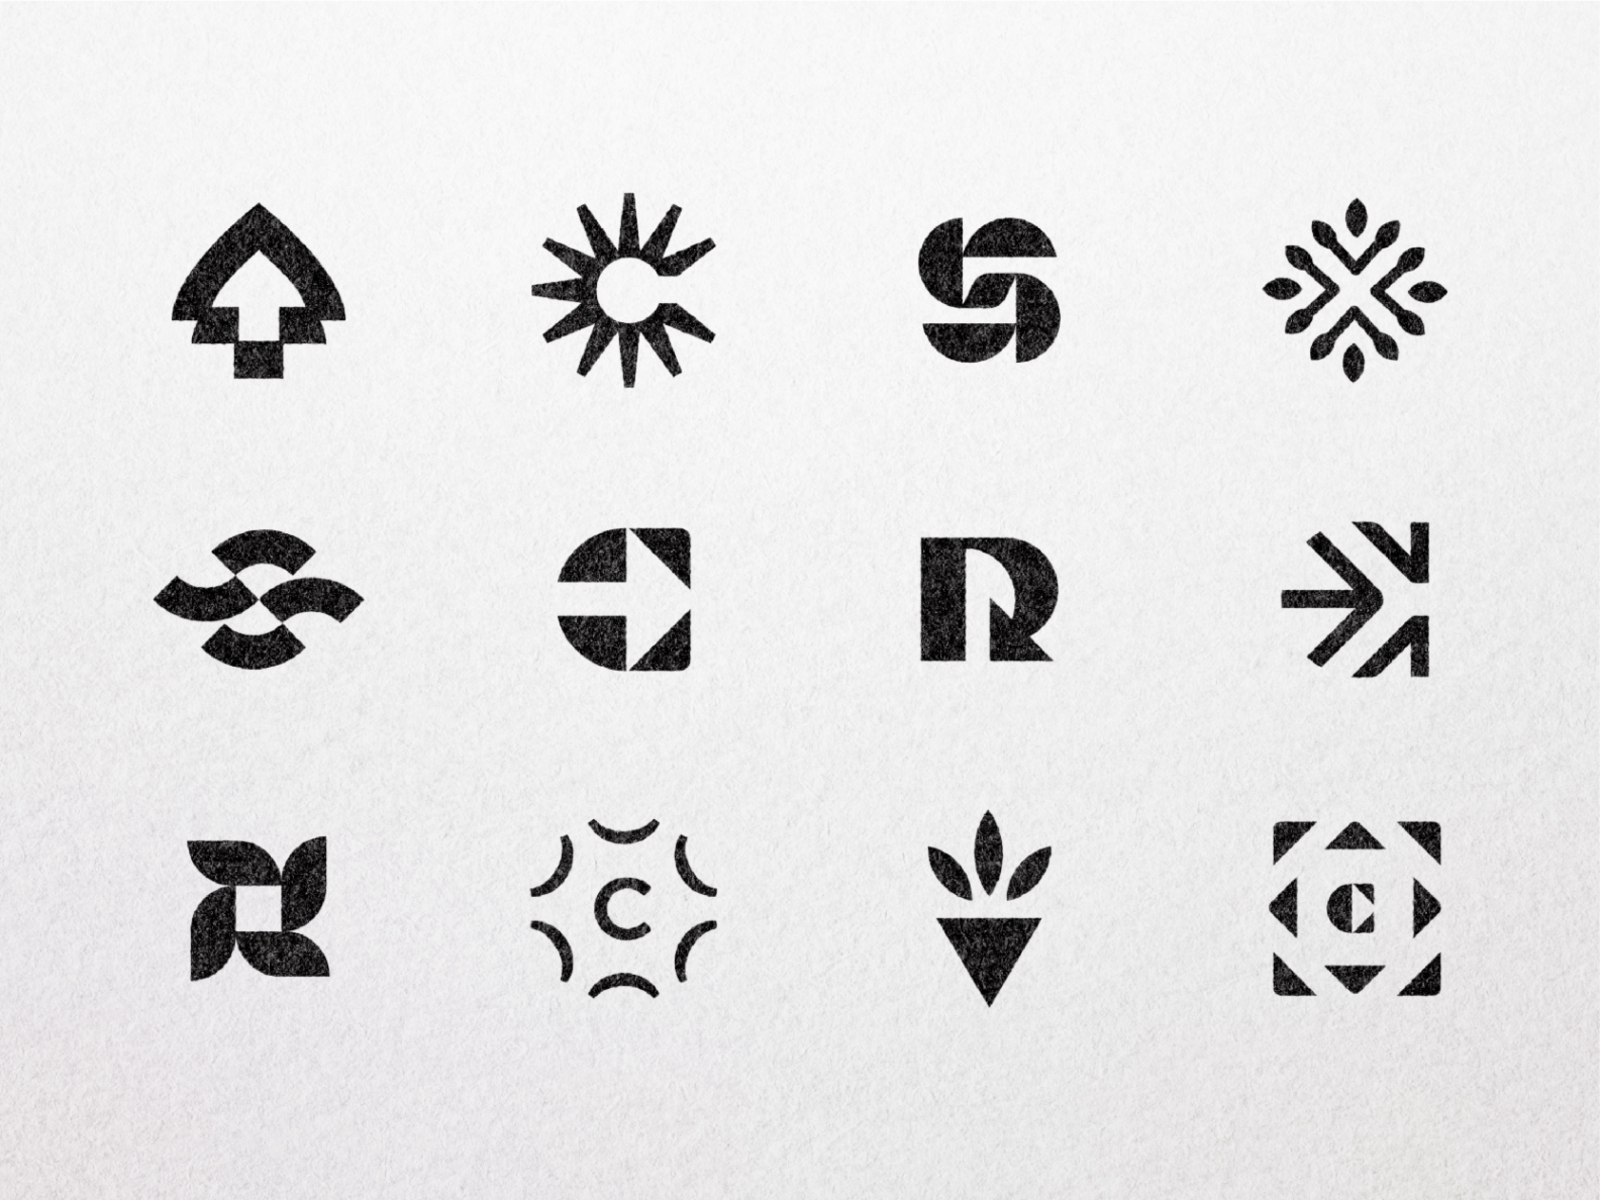 2020 Logos by Beth Sicheneder